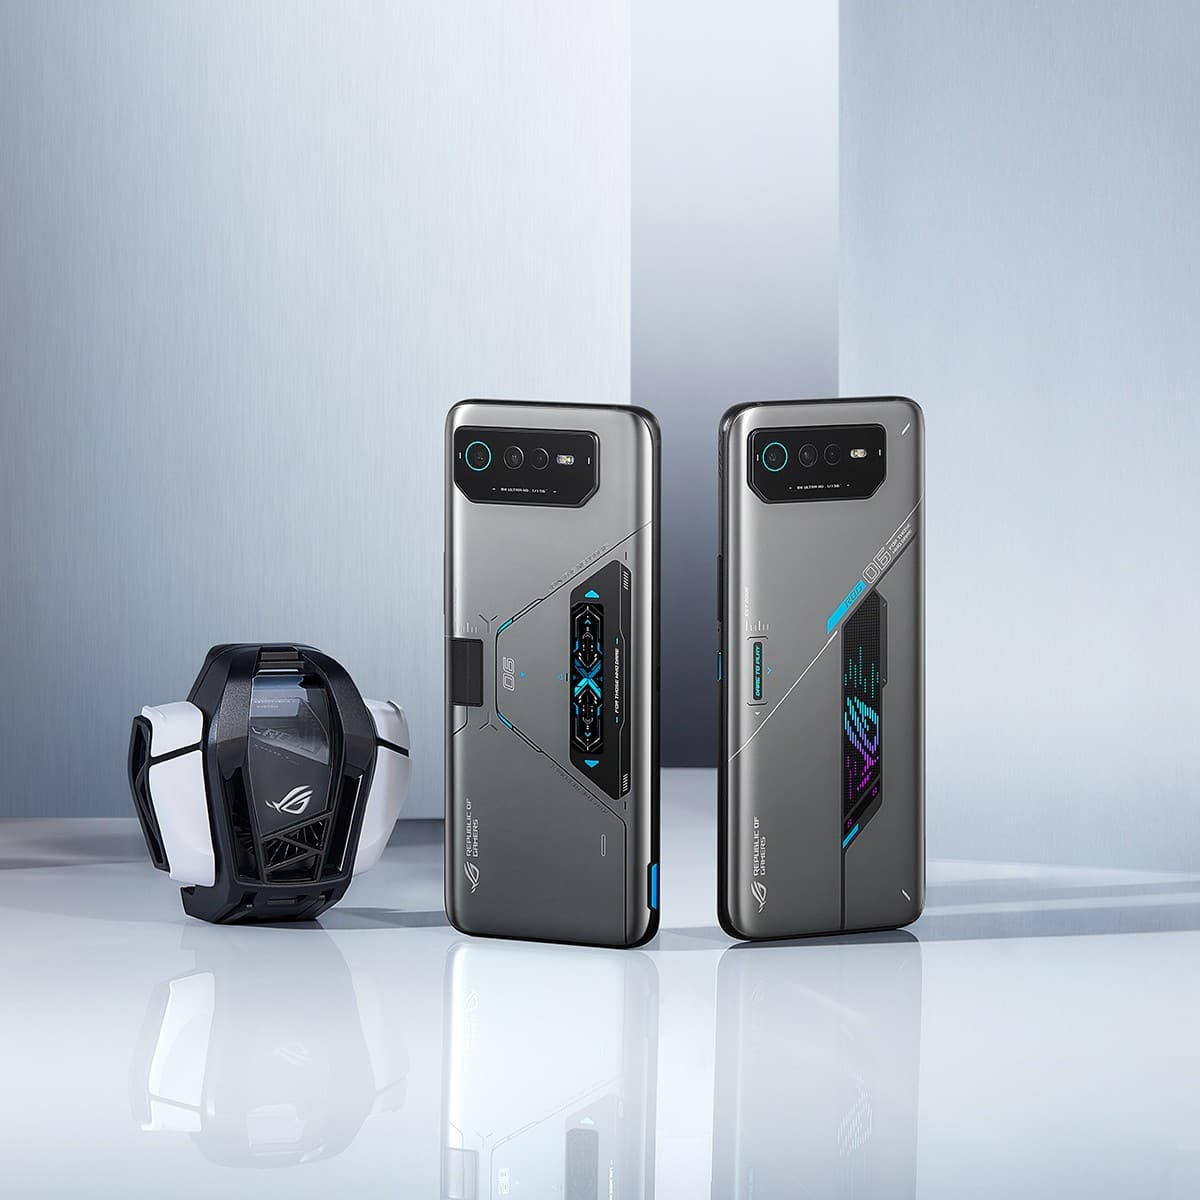 Végre itt van a nagyon várt Asus ROG Phone 6D és 6D Ultimate!